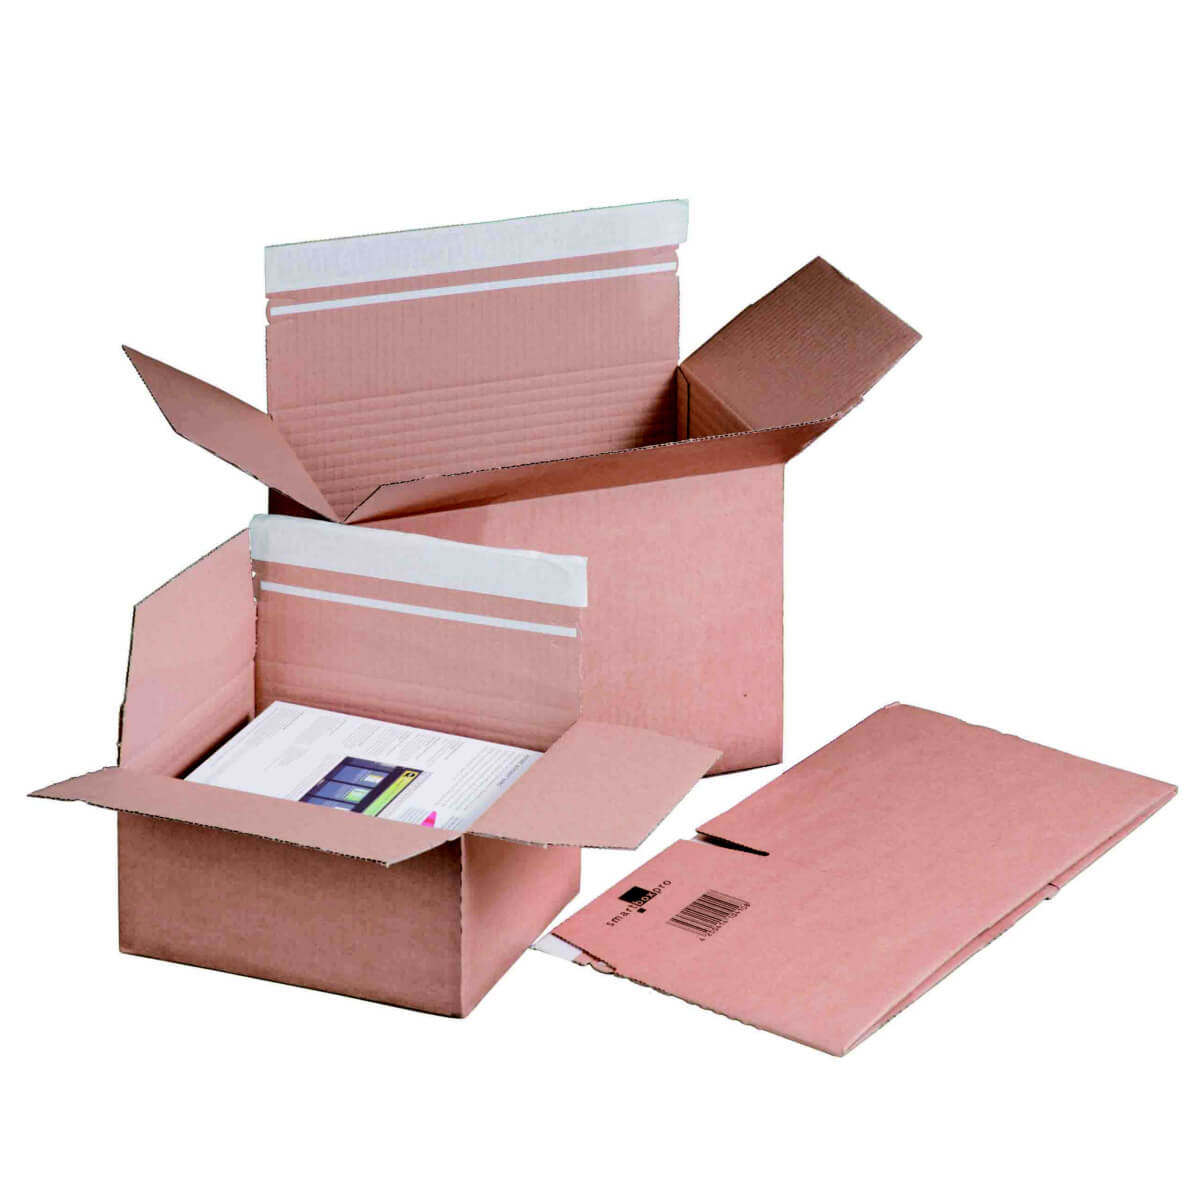 Hinged cardboard box 310x230x158 mm